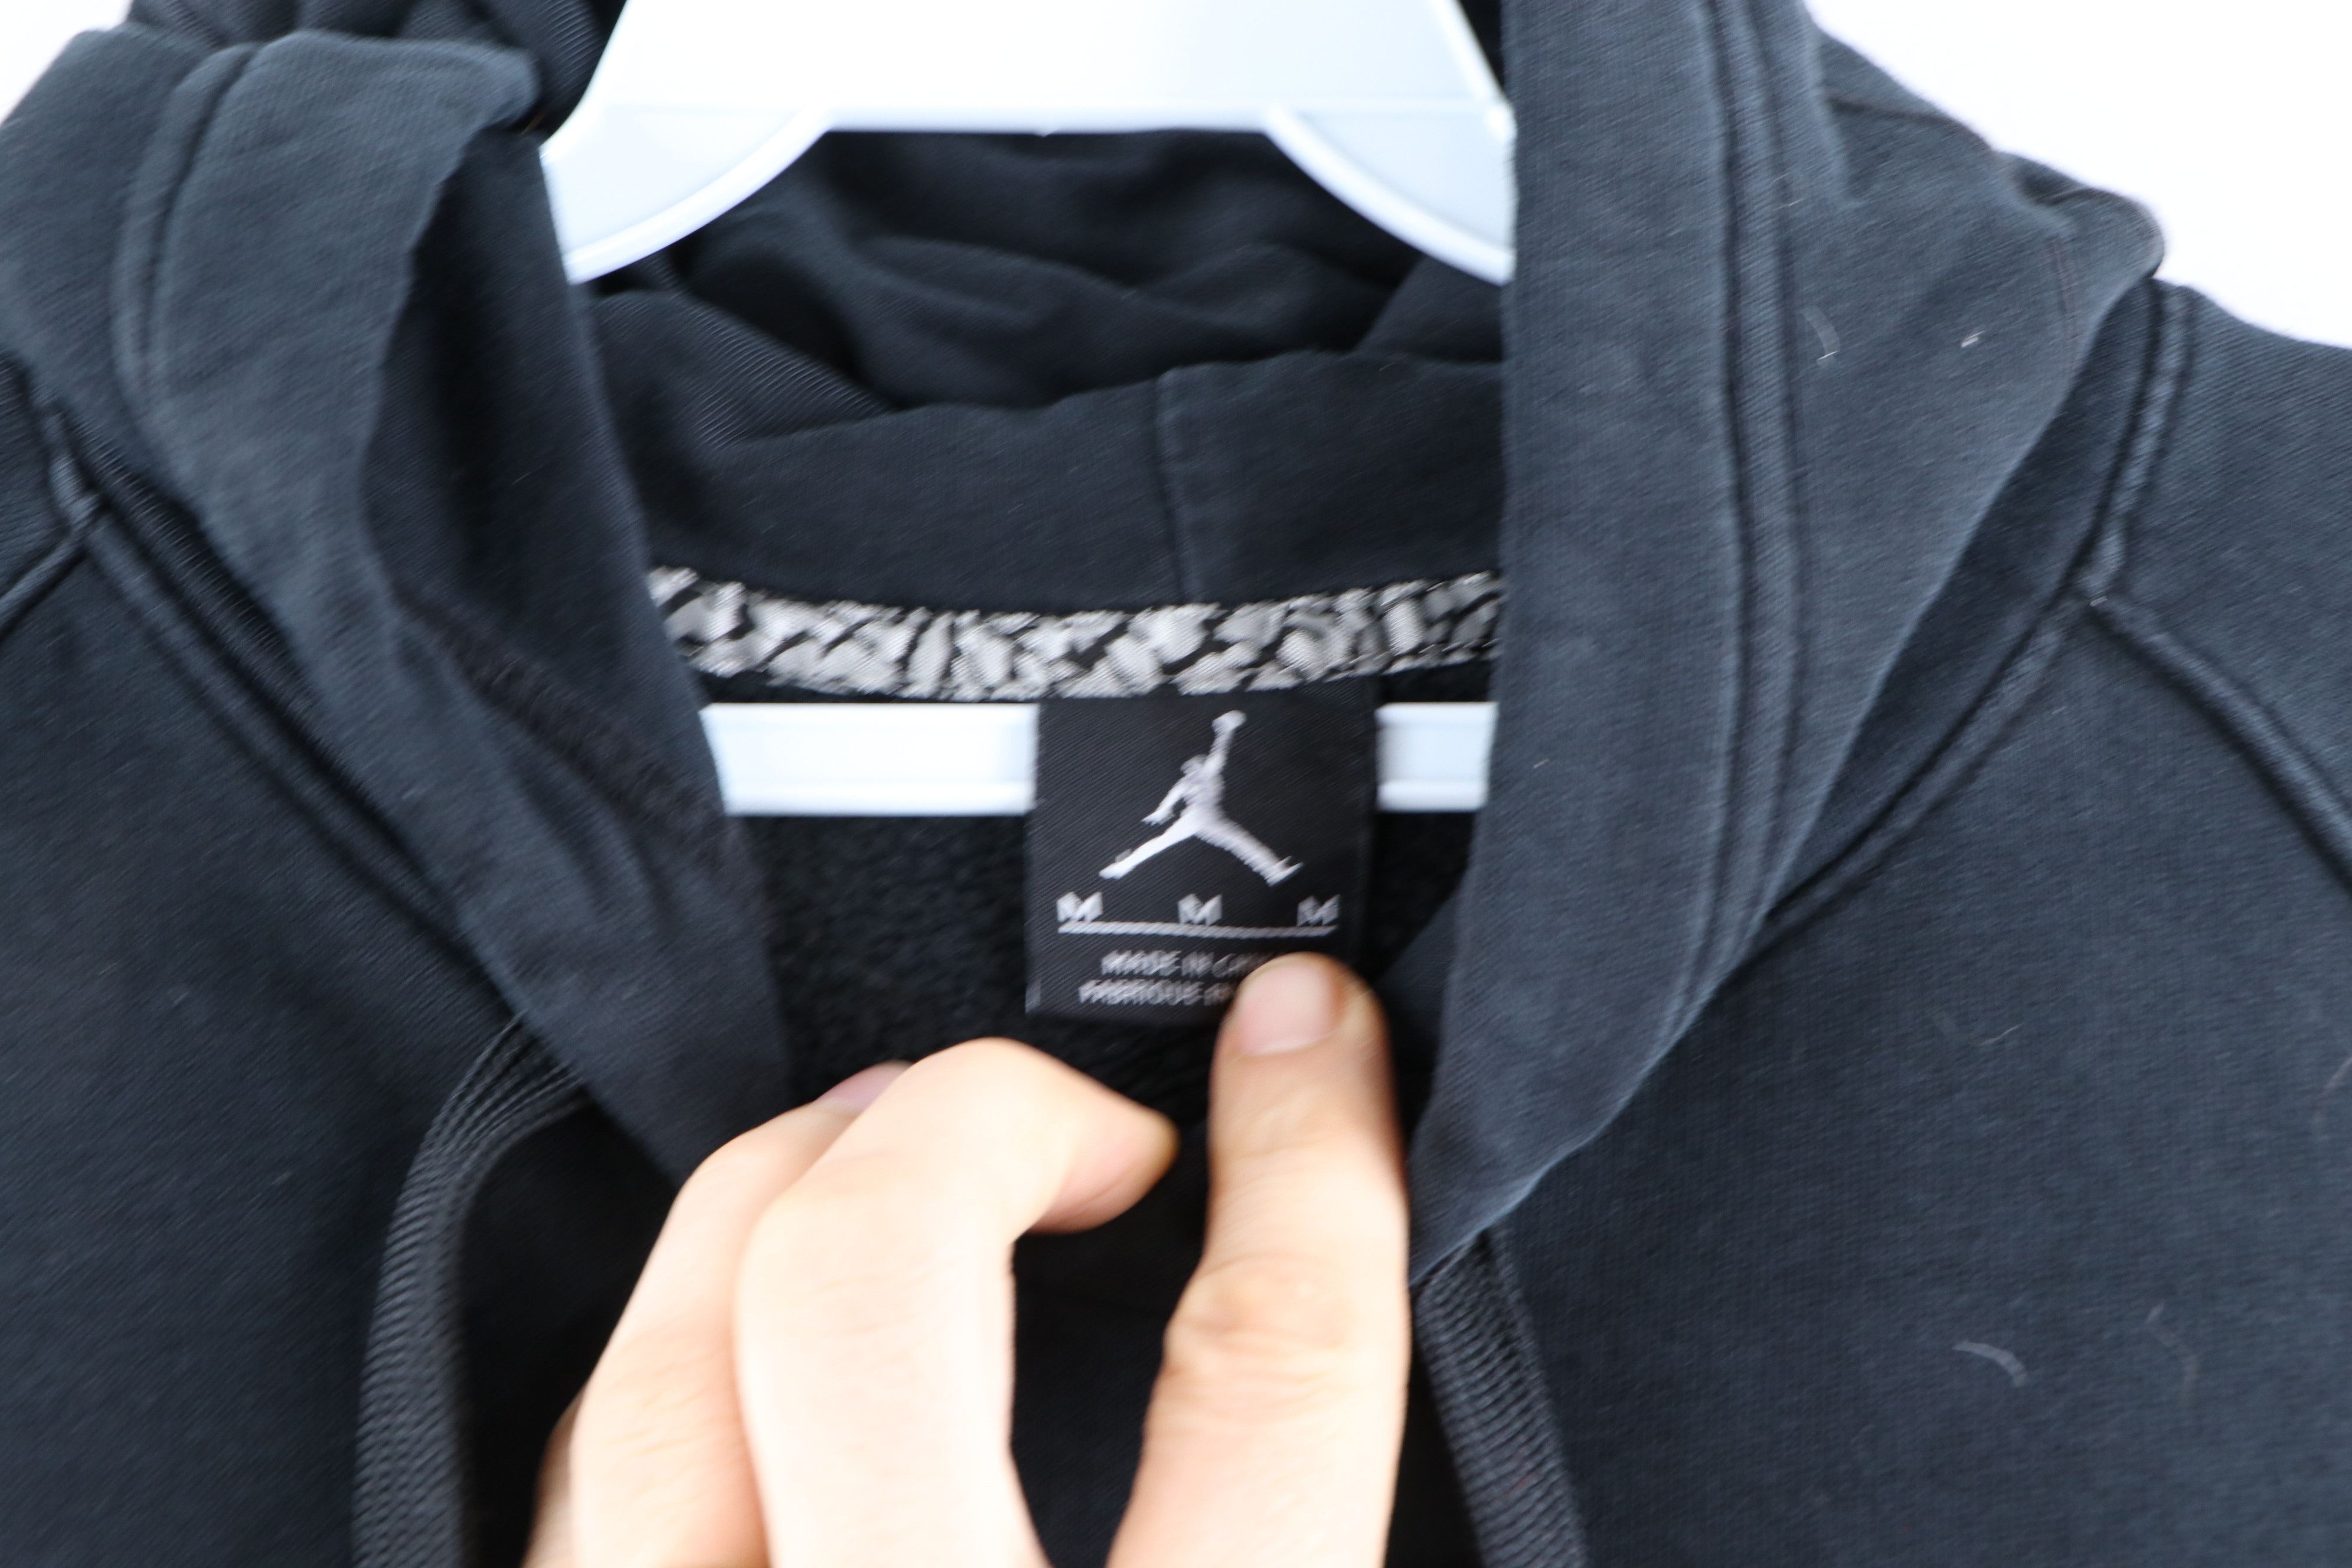 Nike Nike Air Jordan Faded Big Jumpman Logo Hoodie Sweatshirt Size US M / EU 48-50 / 2 - 4 Thumbnail